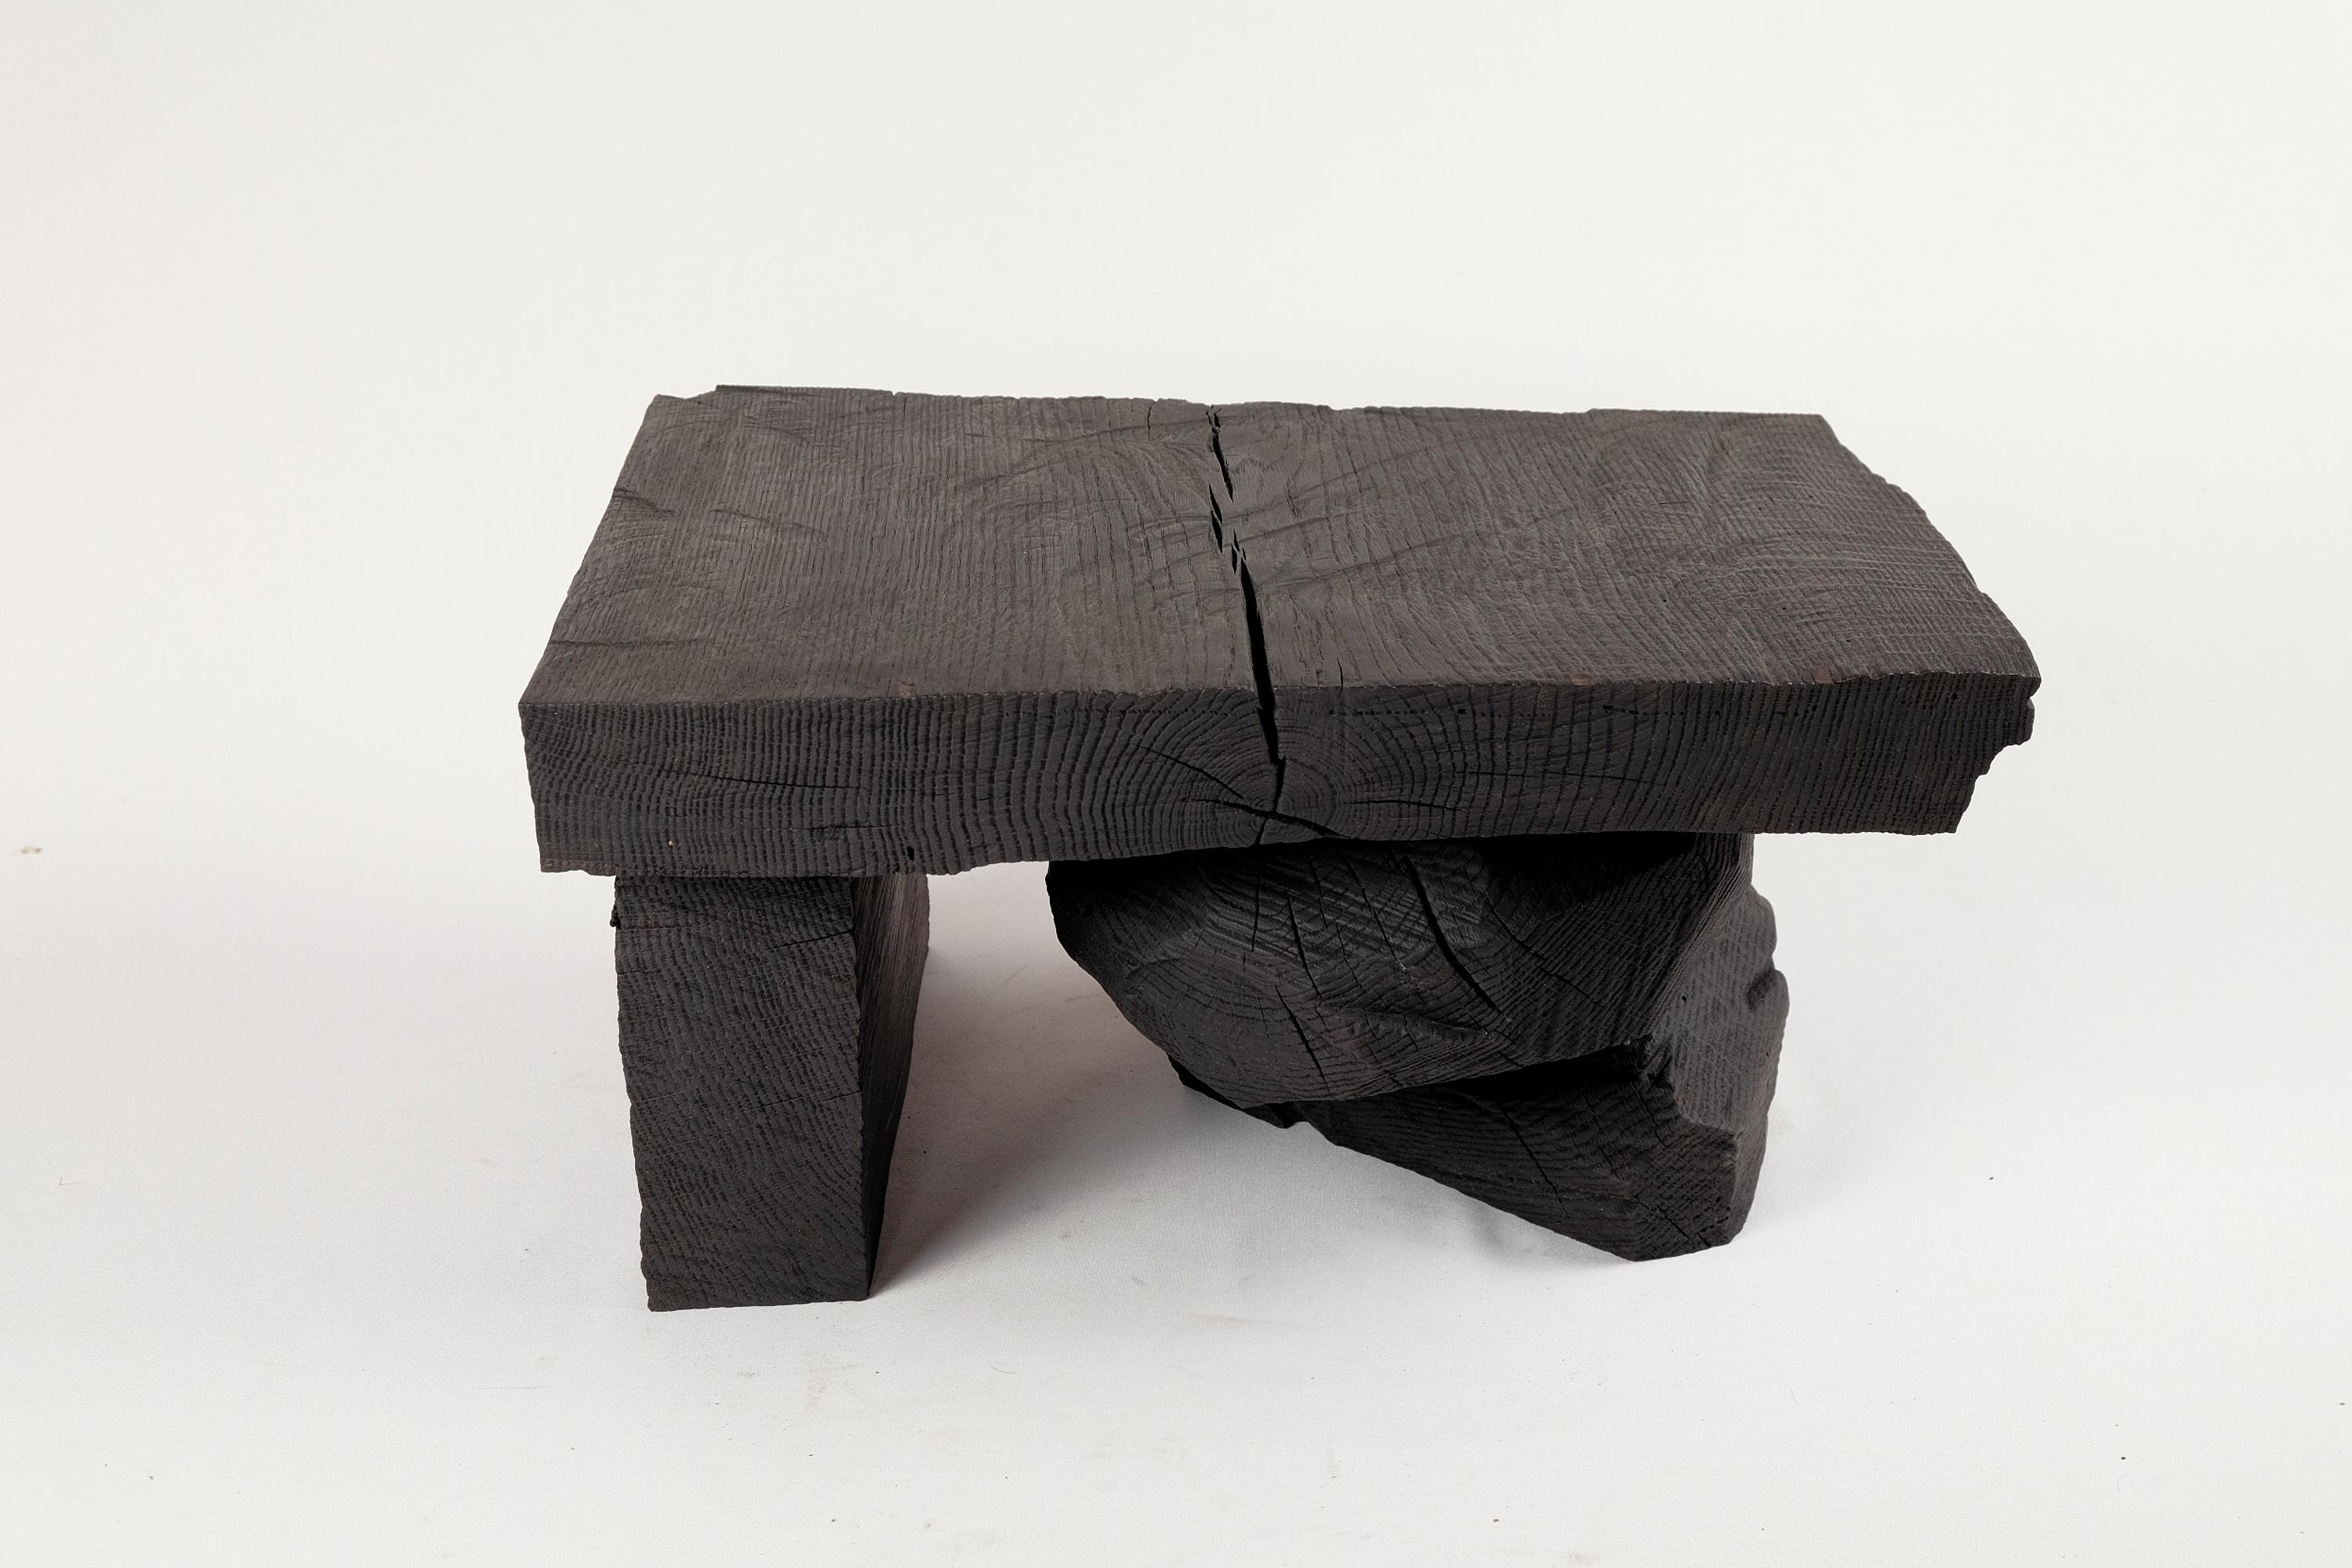 Croatian Solid Burnt Wood, Sculptural Side Table, Original Contemporary Design, Logniture For Sale